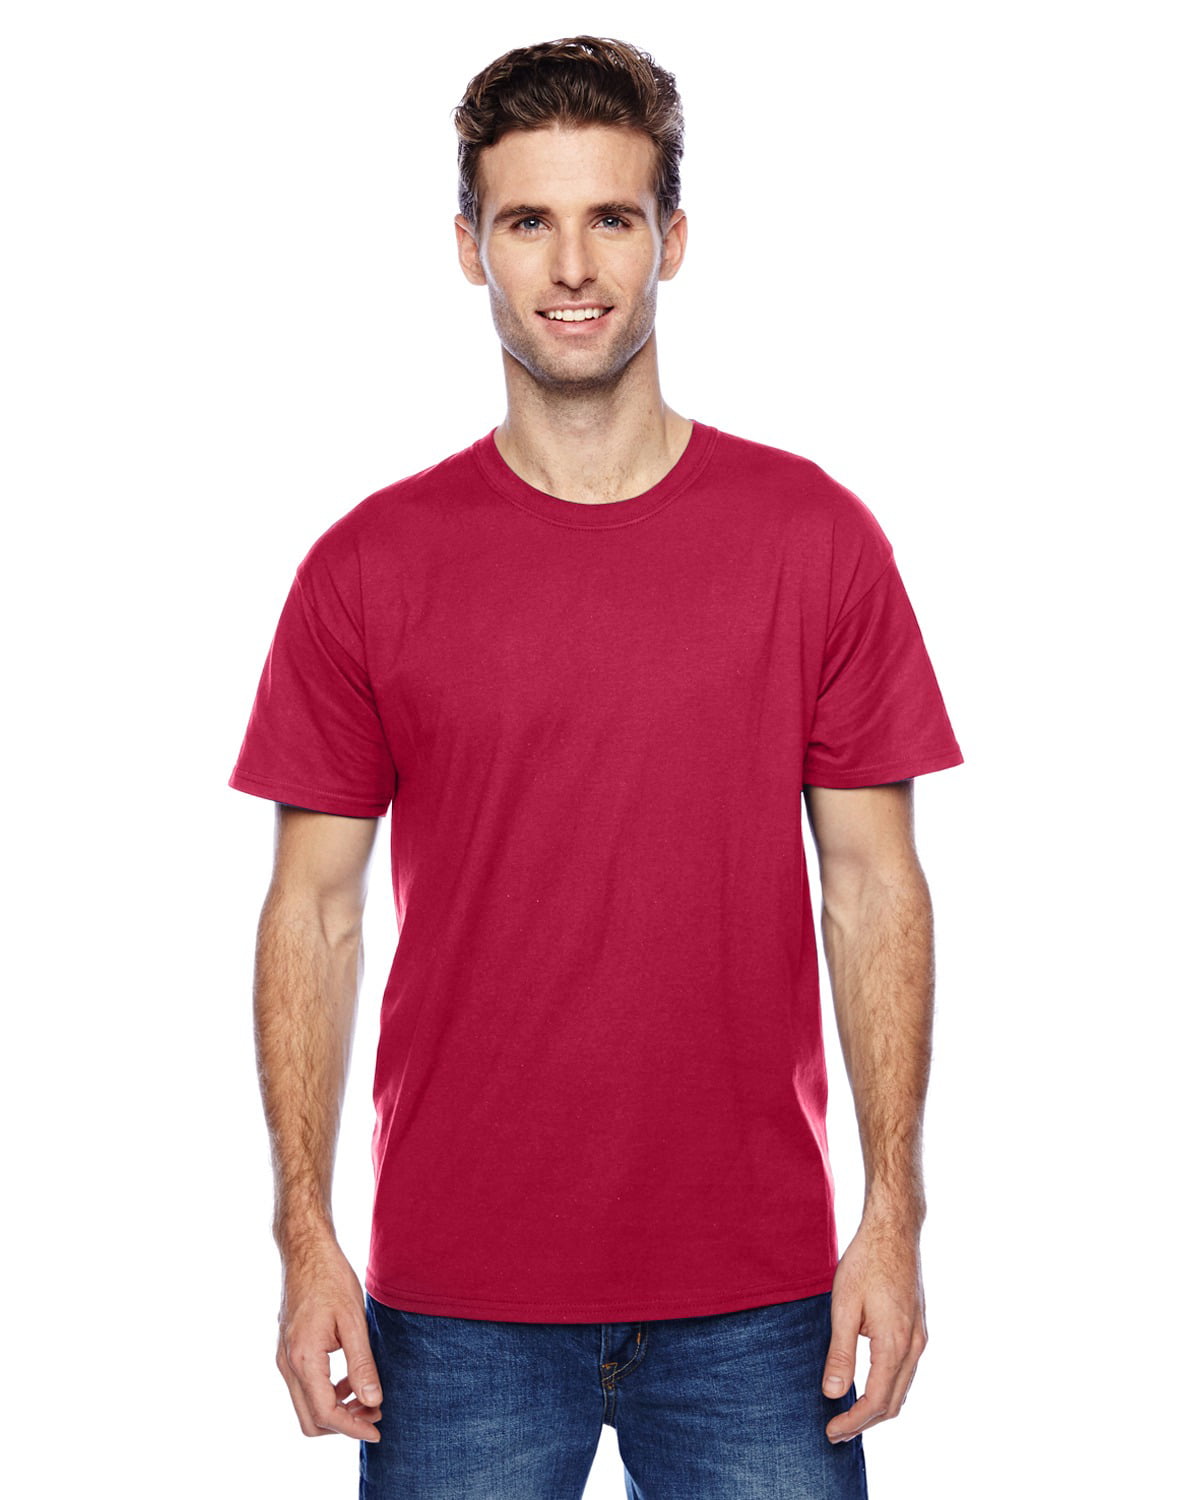 Hanes - The Hanes Unisex 45 oz X-Temp Performance T-Shirt - DEEP RED ...